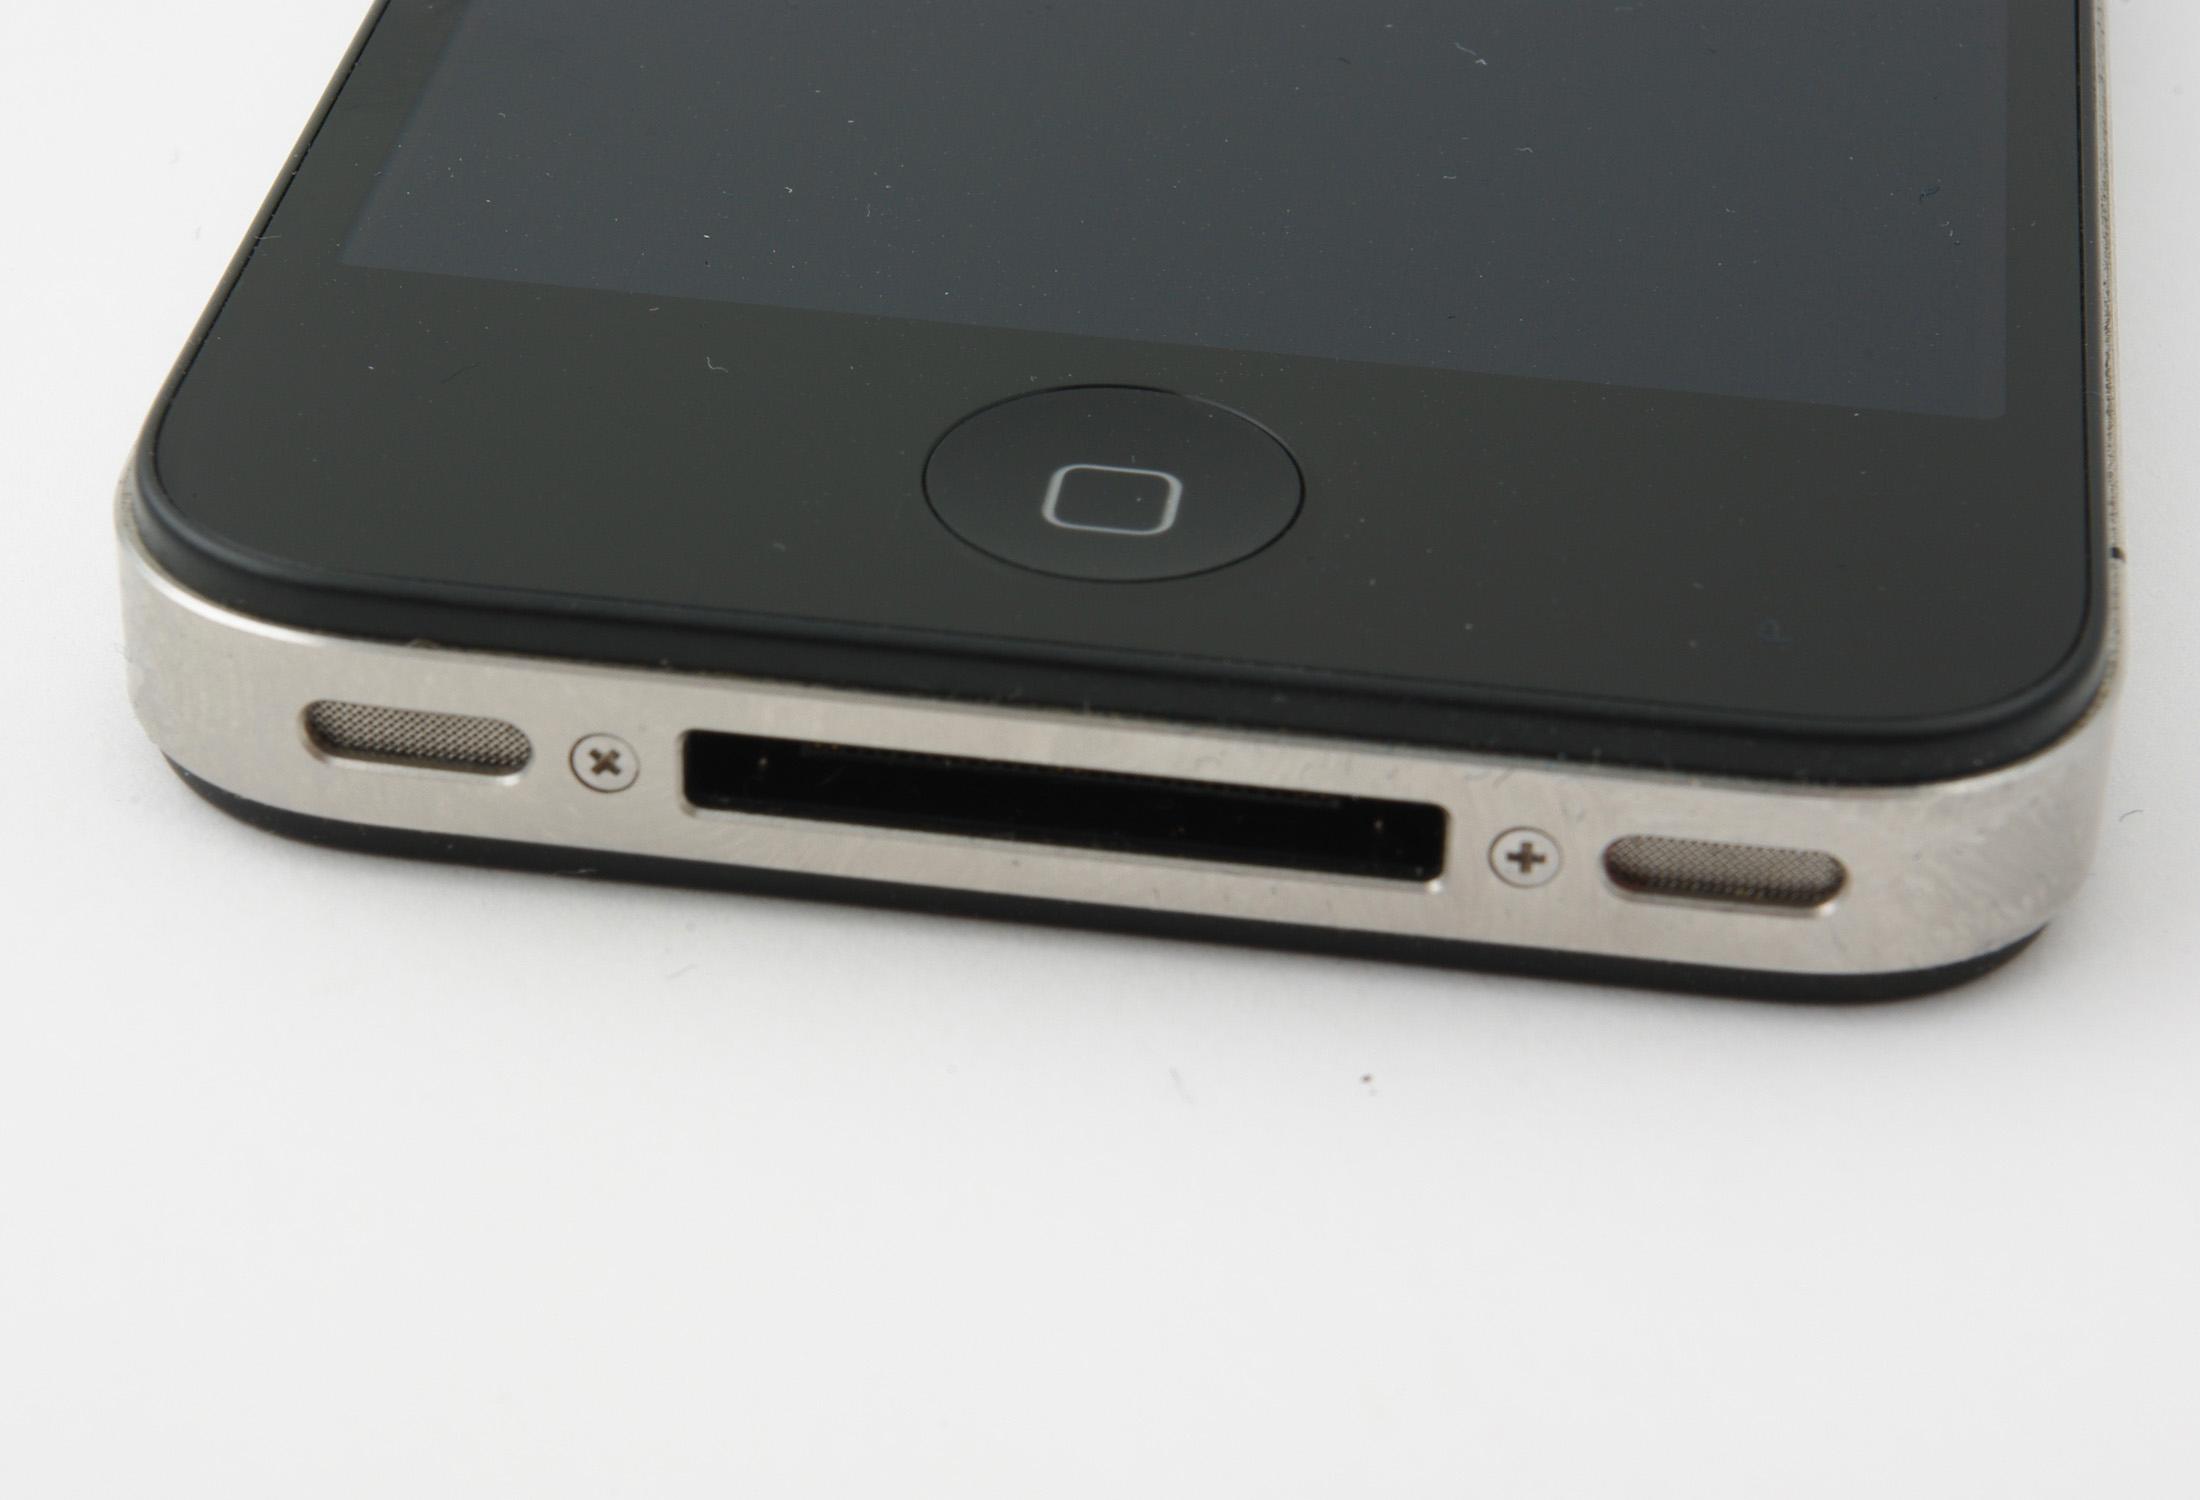 Ingen Micro-USB på Iphone 4. Dette er en ulempe, men det har dukket opp ekstreme mengder tilbehør som passer Apples proprietære Dock Connector-plugg.